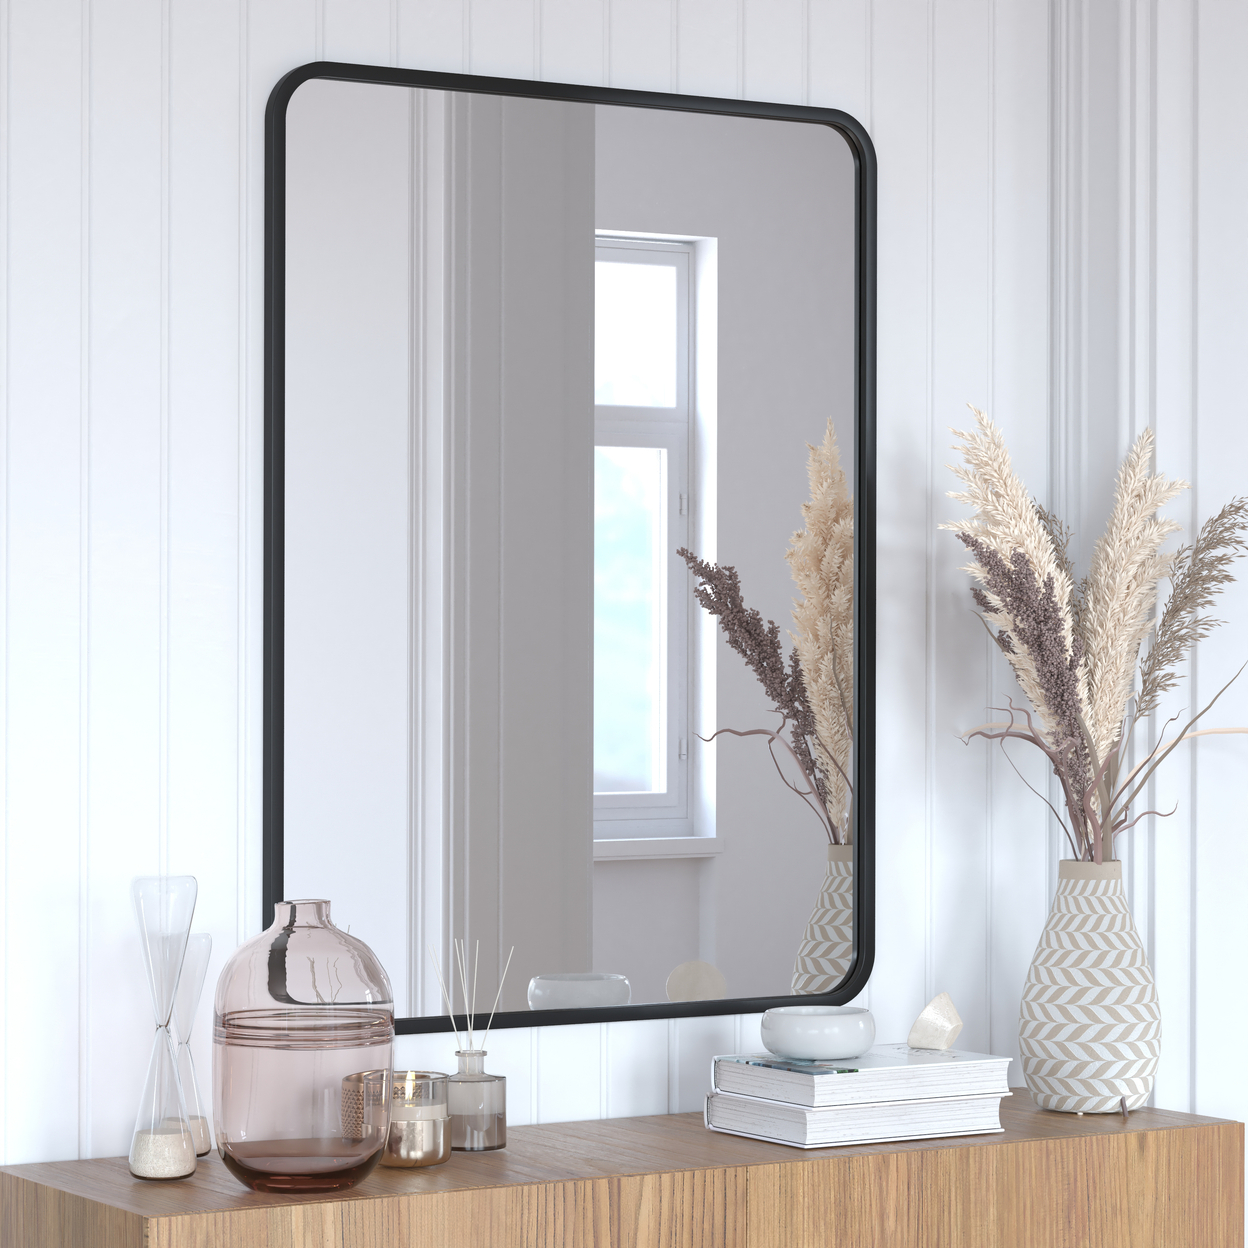 Jada 40 X 30 Decorative Wall Mirror - Rounded Corners, Bathroom & Living Room Glass Mirror Hangs Horizontal Or Vertical, Matte Black